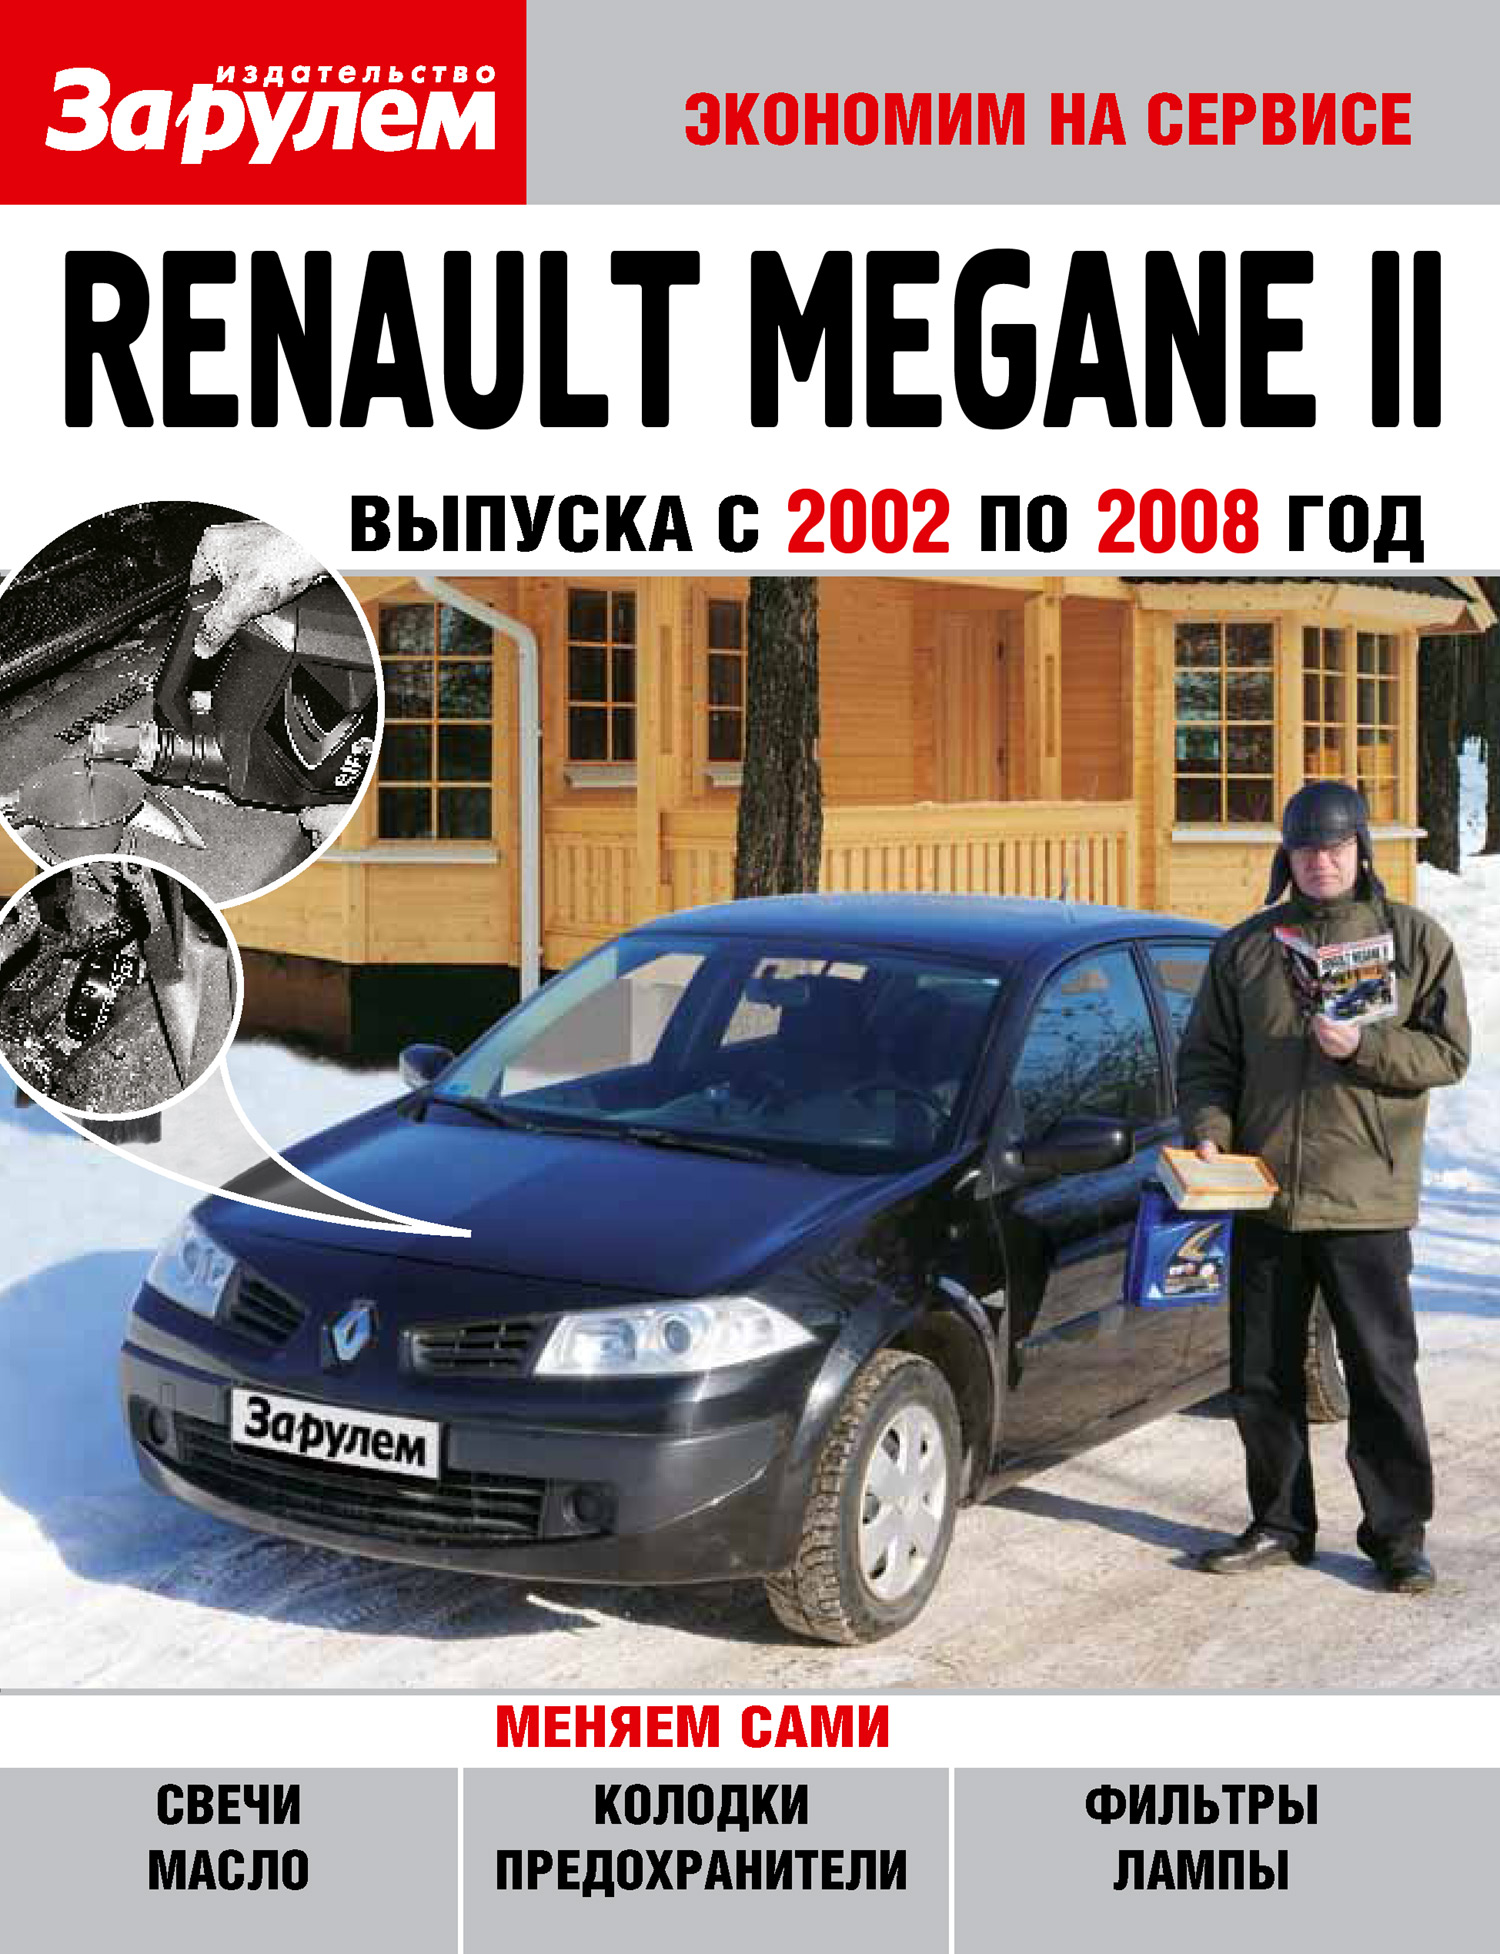 Renault Megane IIвыпуска с 2002 по 2008 год